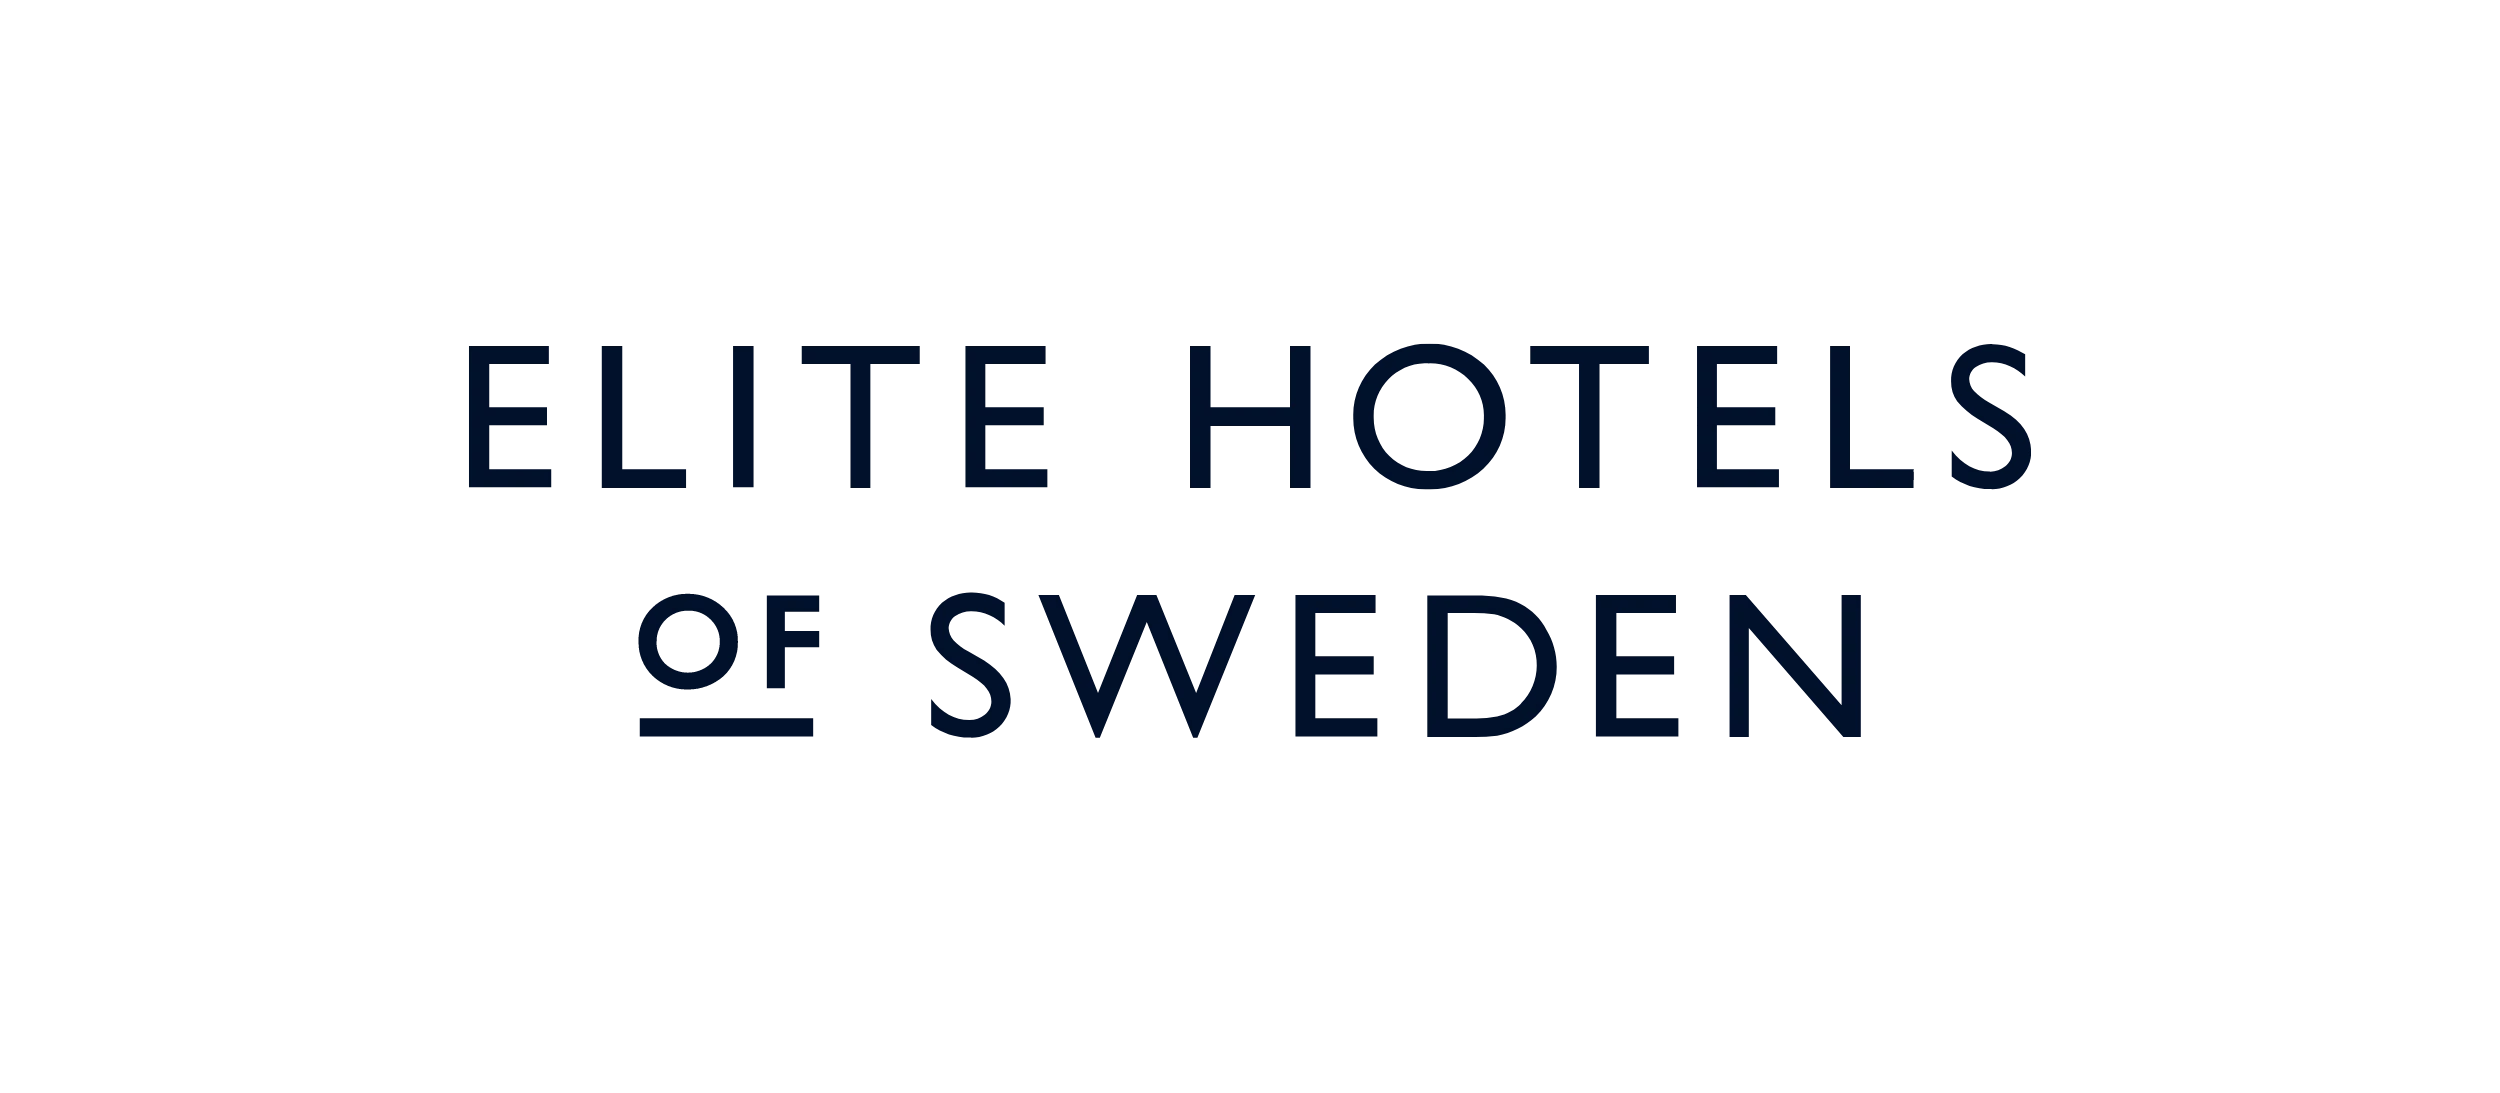 Elite hotels of sweden väljer Adyen